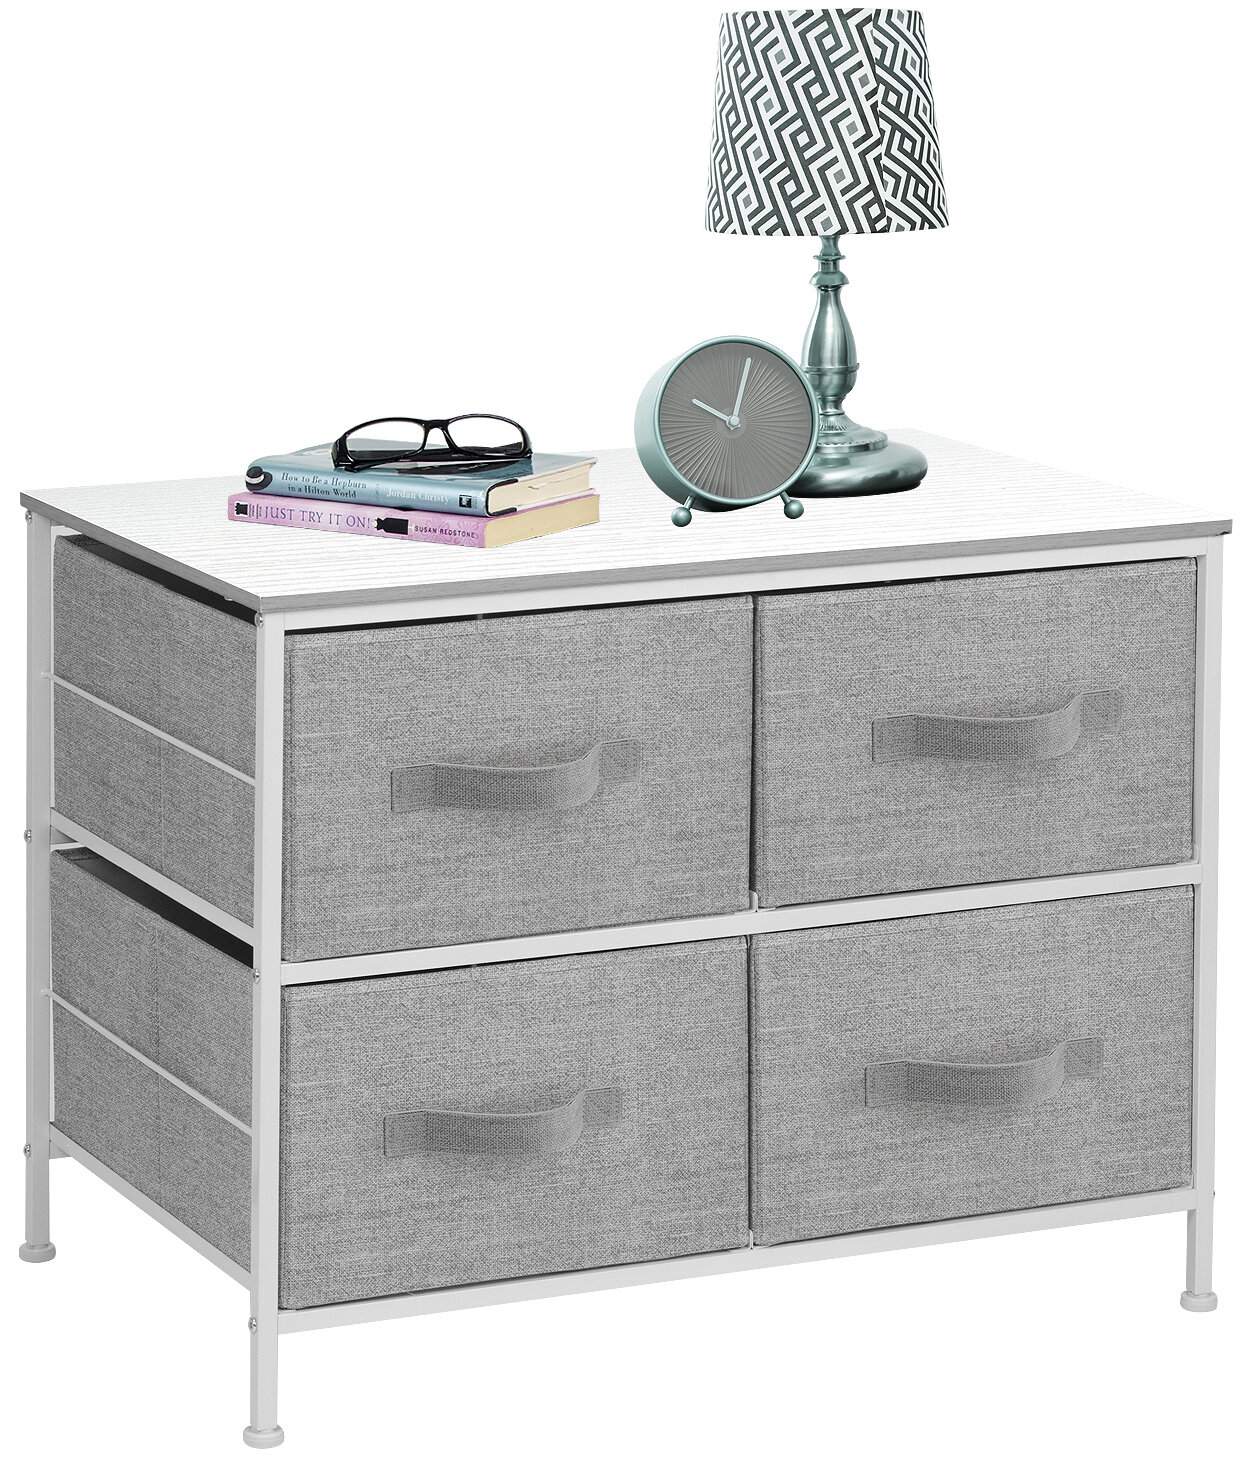 Ebern Designs Ulu 4 Drawer Dresser Reviews Wayfair